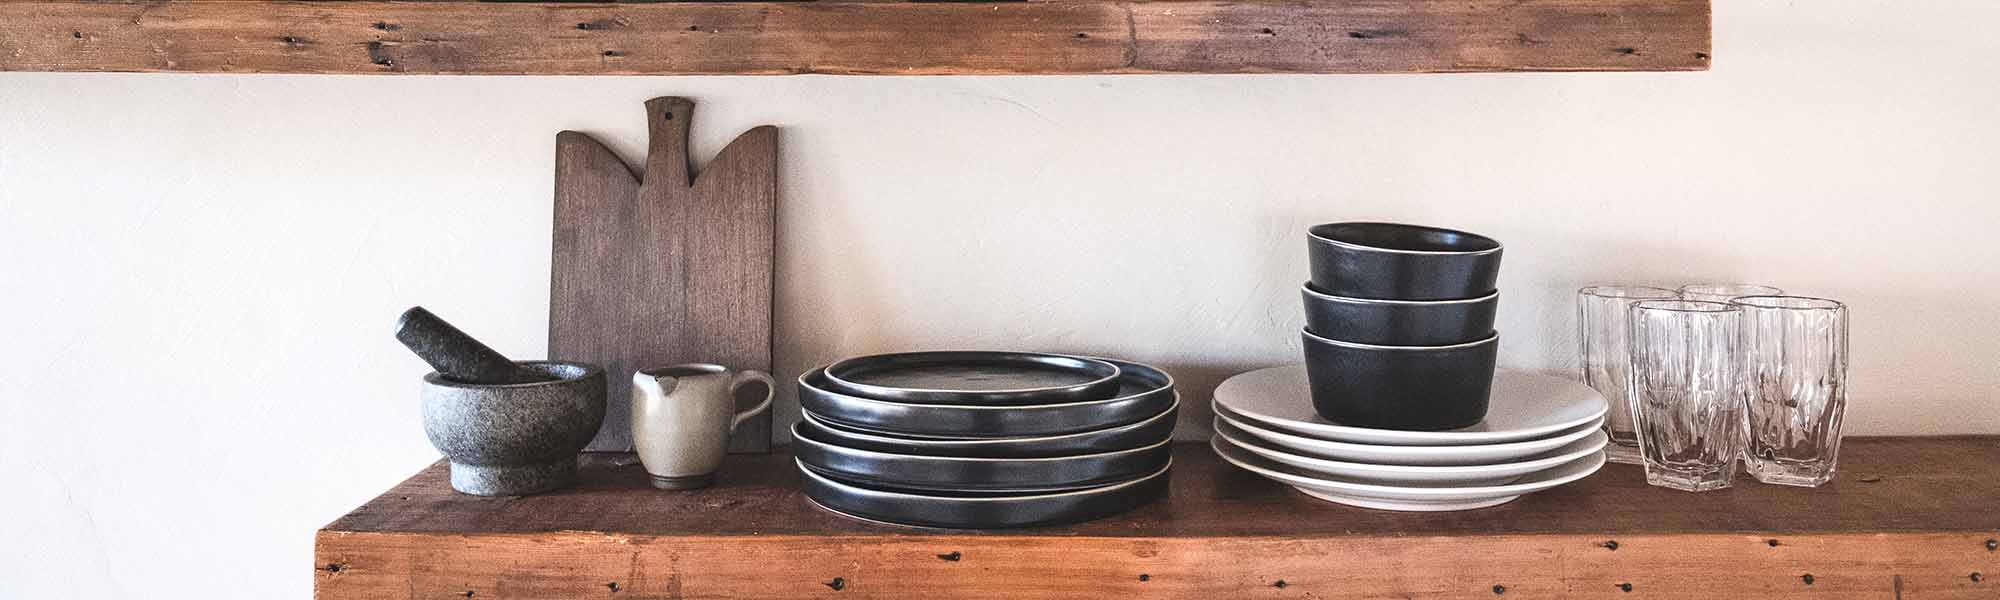 Craft ceramic dinnerware on a wooden shelf